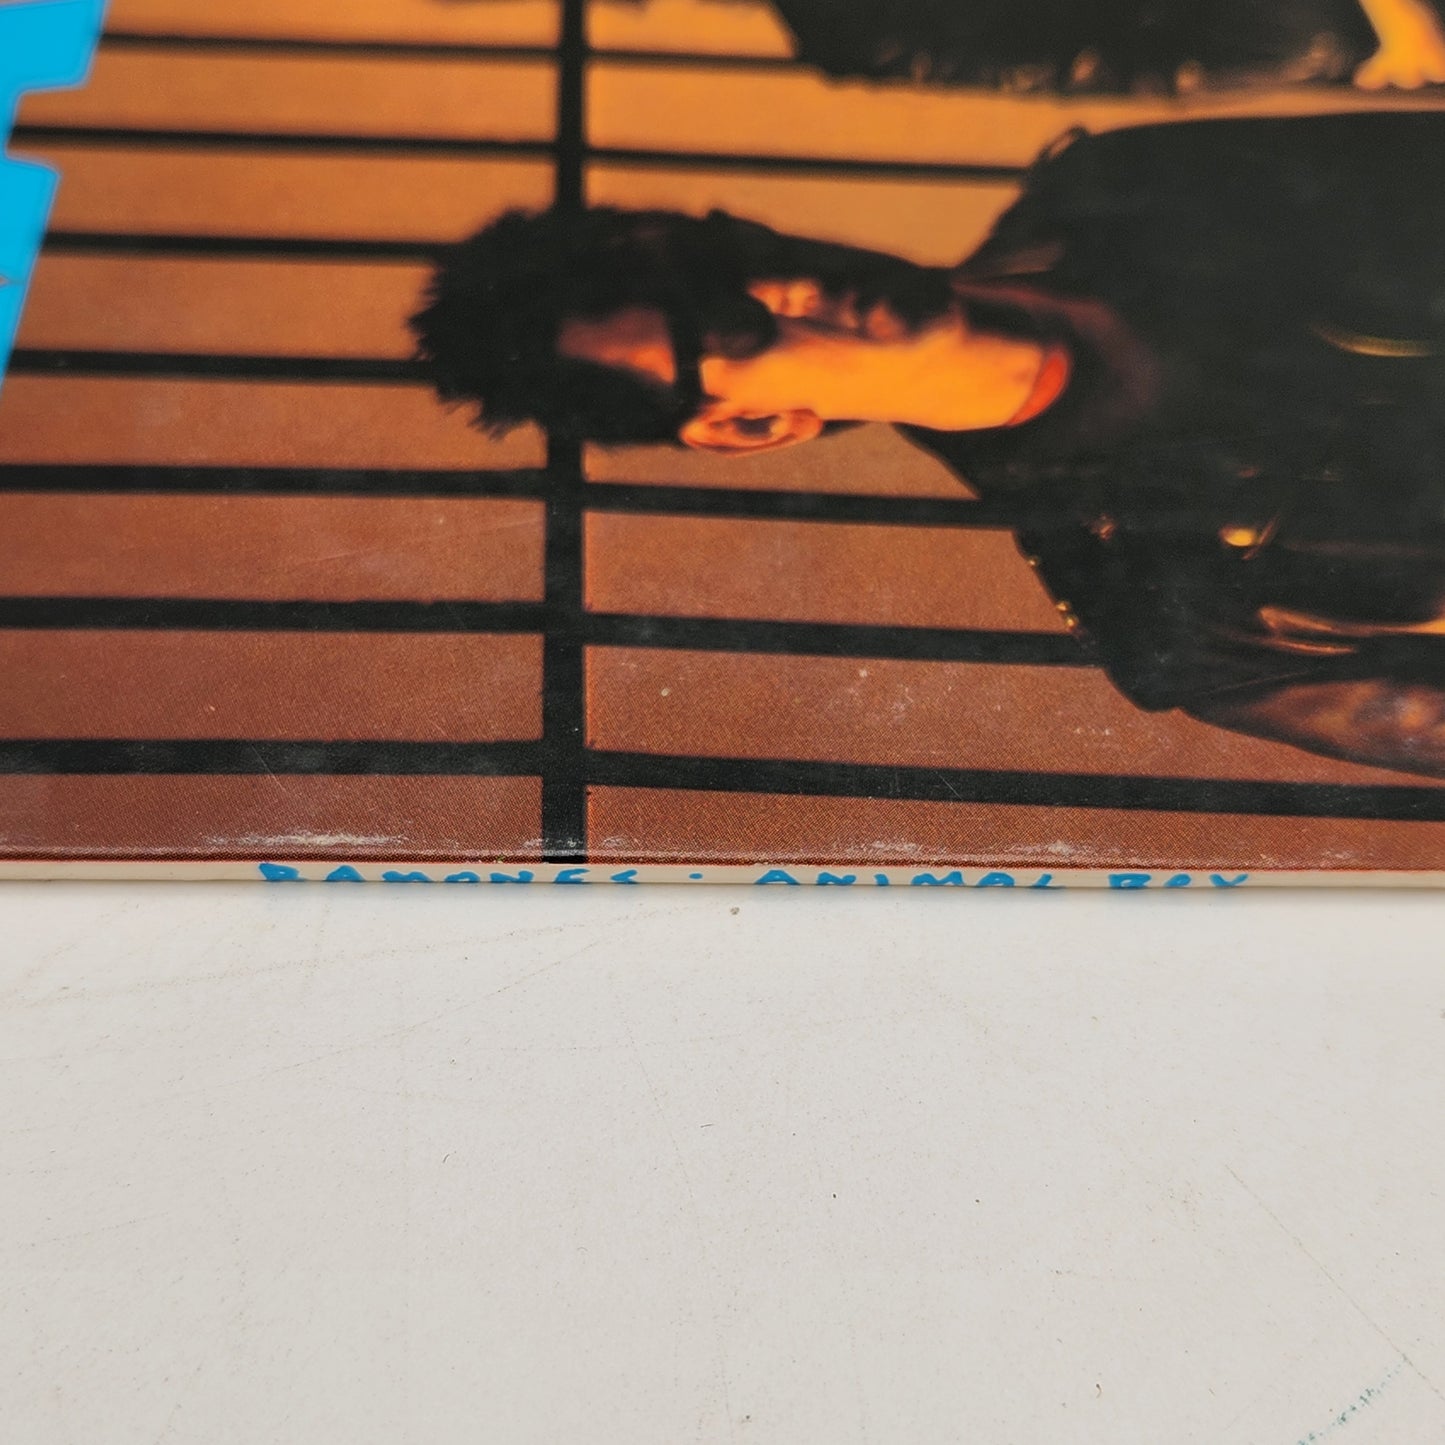 Ramones "Animal Boy" 1986 Punk Rock Record Album